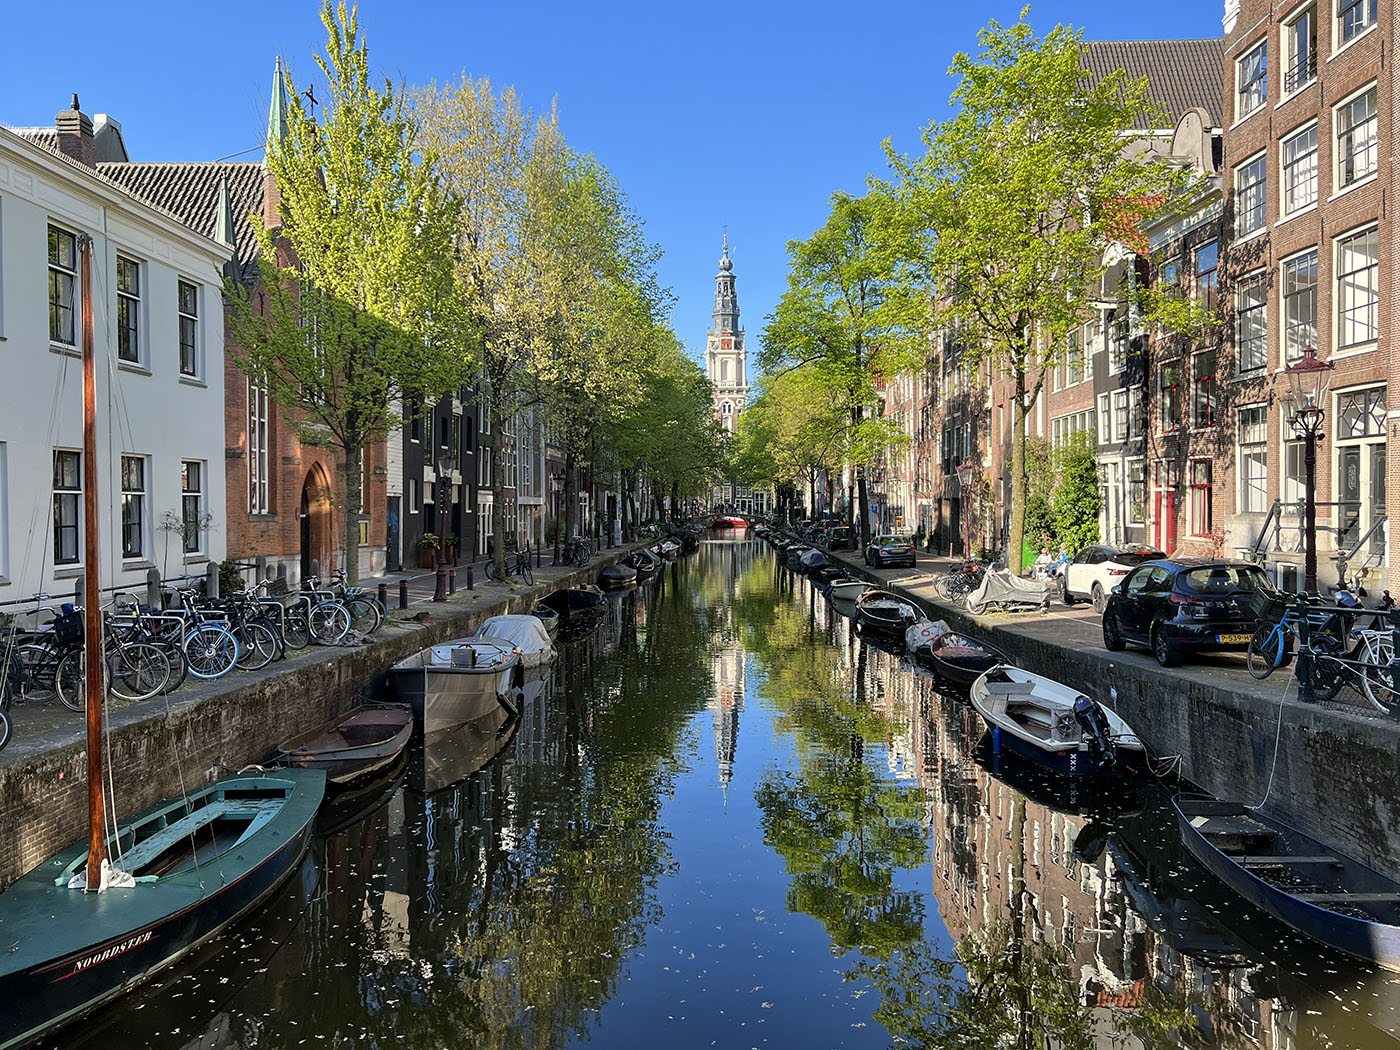 Amsterdam canal reflection. The Netherlands. Credit: Carolina Valenzuela